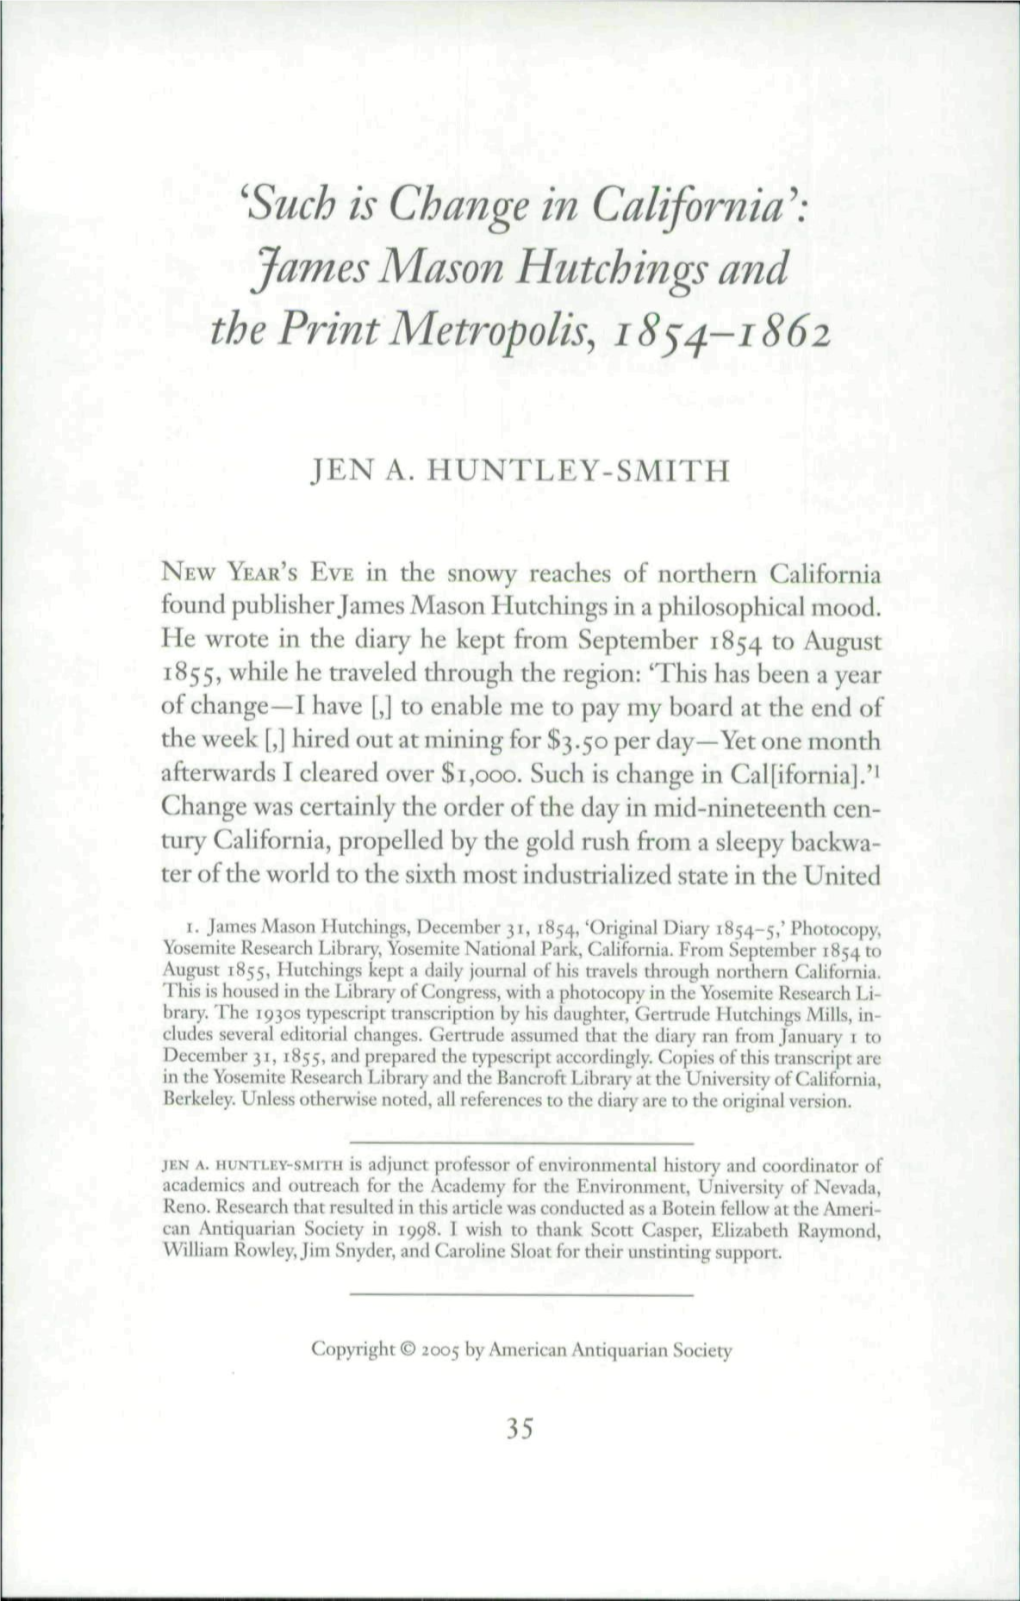 James Mason Hutchings and the Print Metropolis^